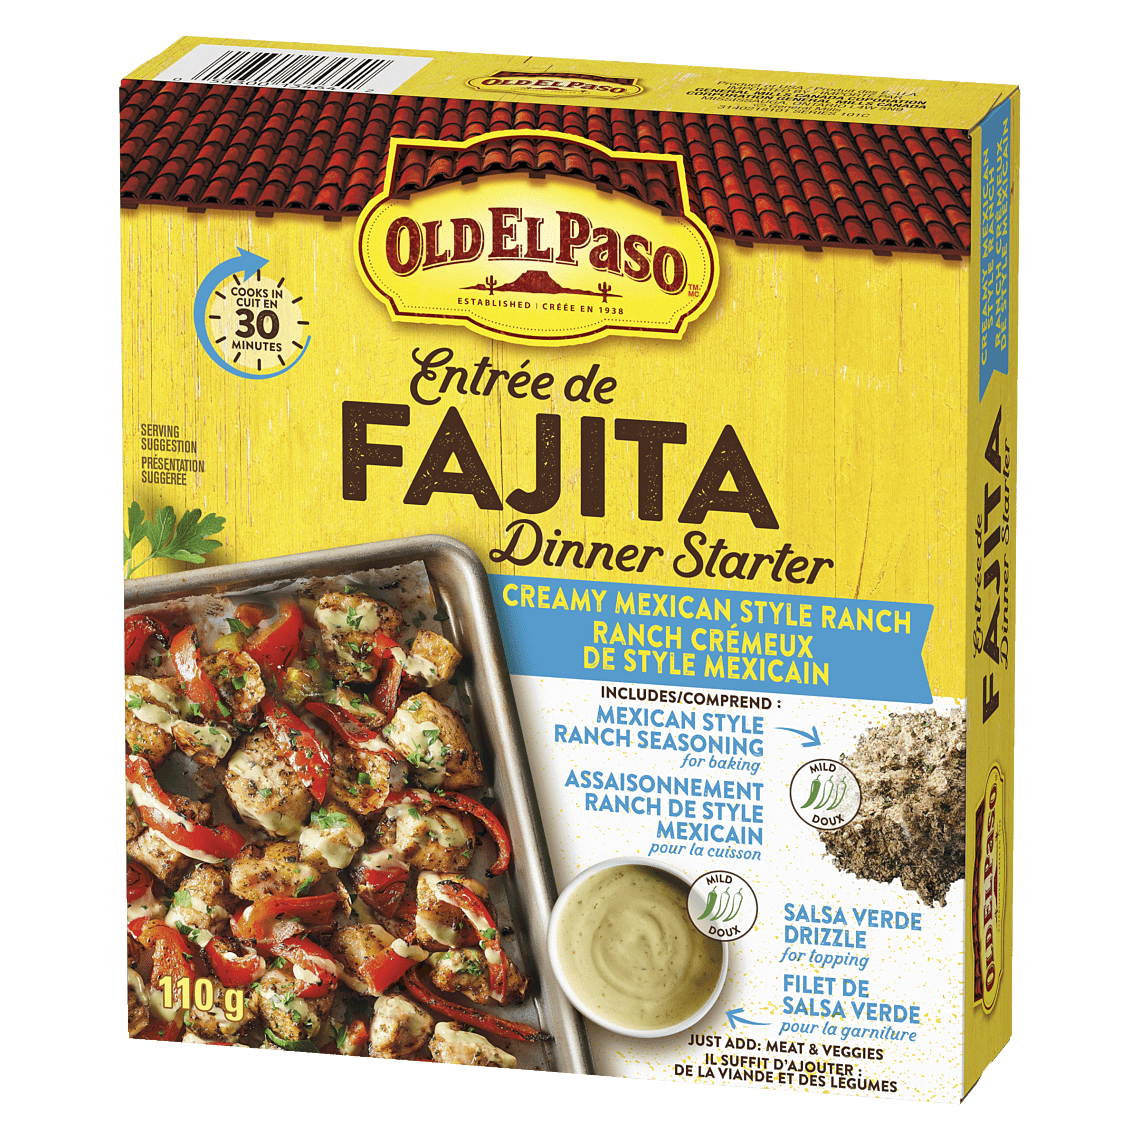 Fajita Dinner Starter – Creamy Mexican Style Ranch